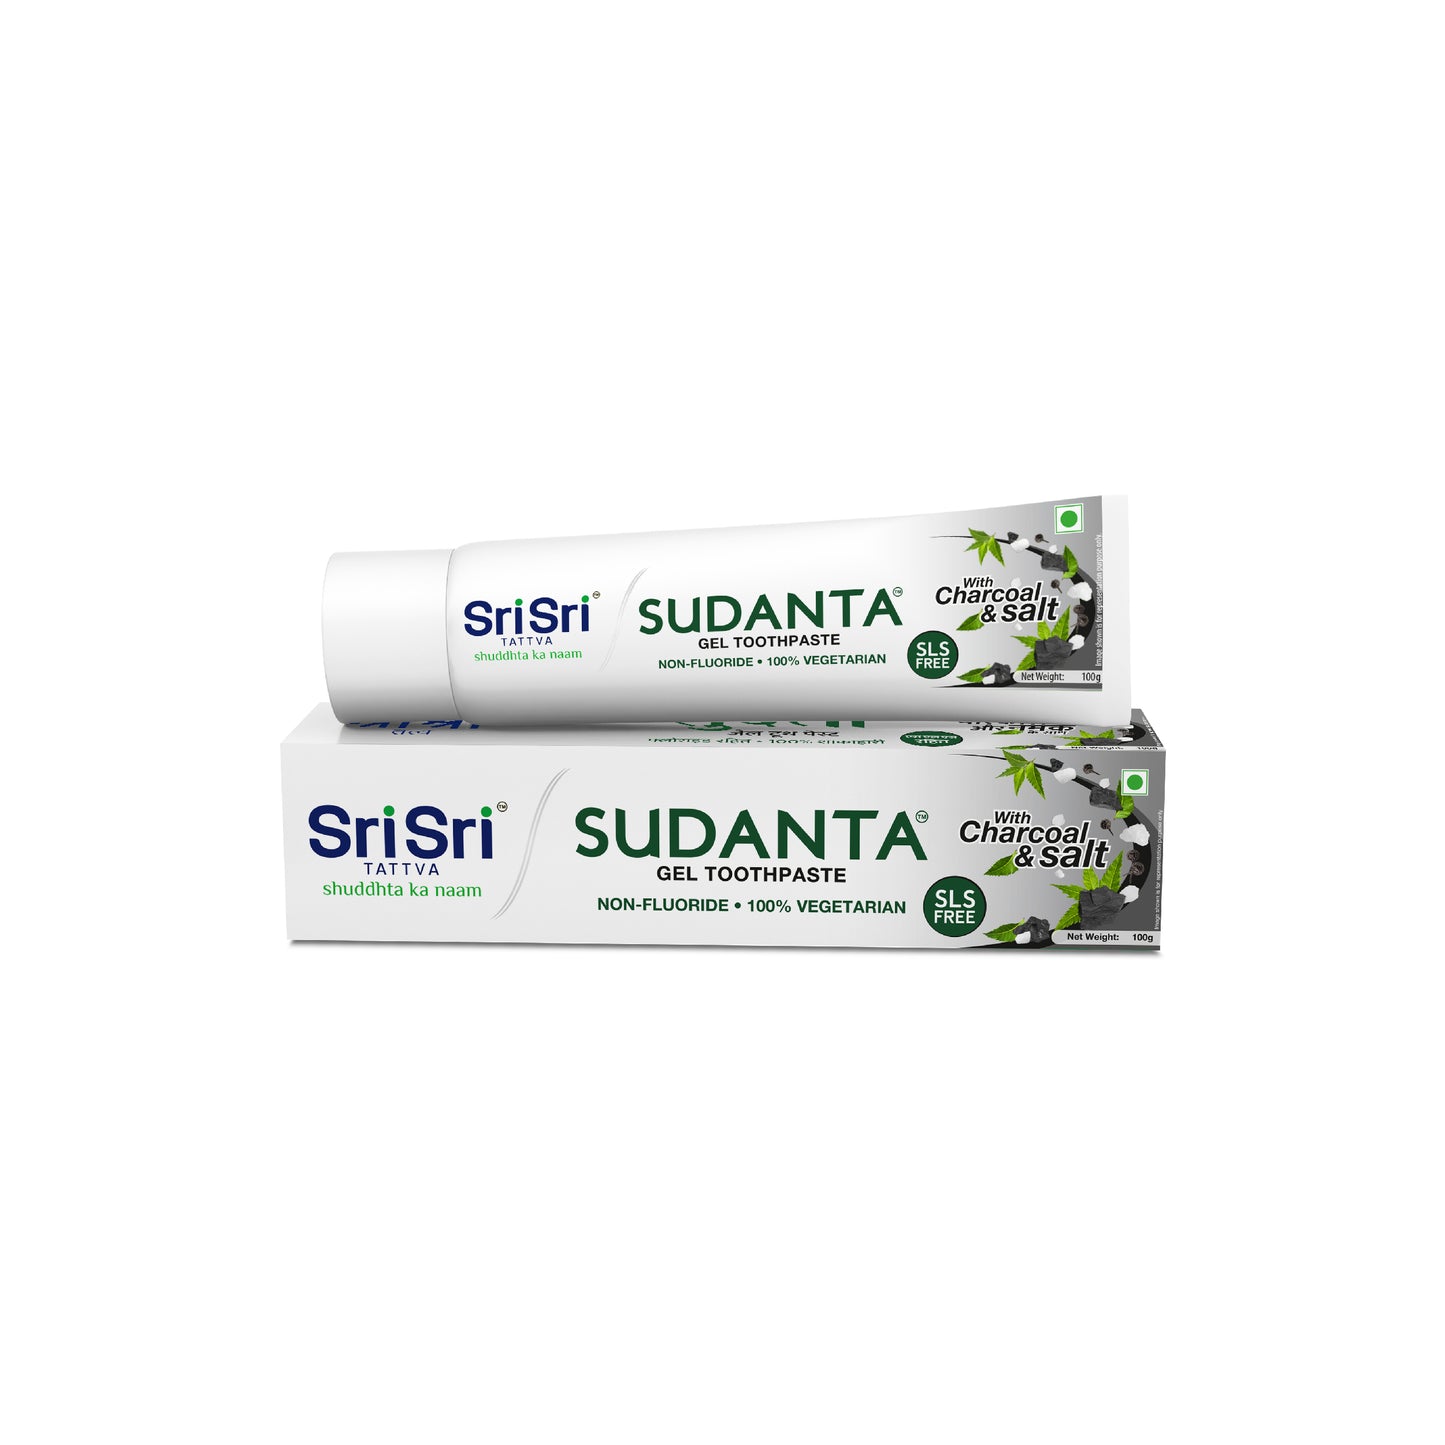 Sudanta Gel Toothpaste - With Charcoal & Salt. SLS Free. Non - Fluoride - 100% Vegetarian, 100 g